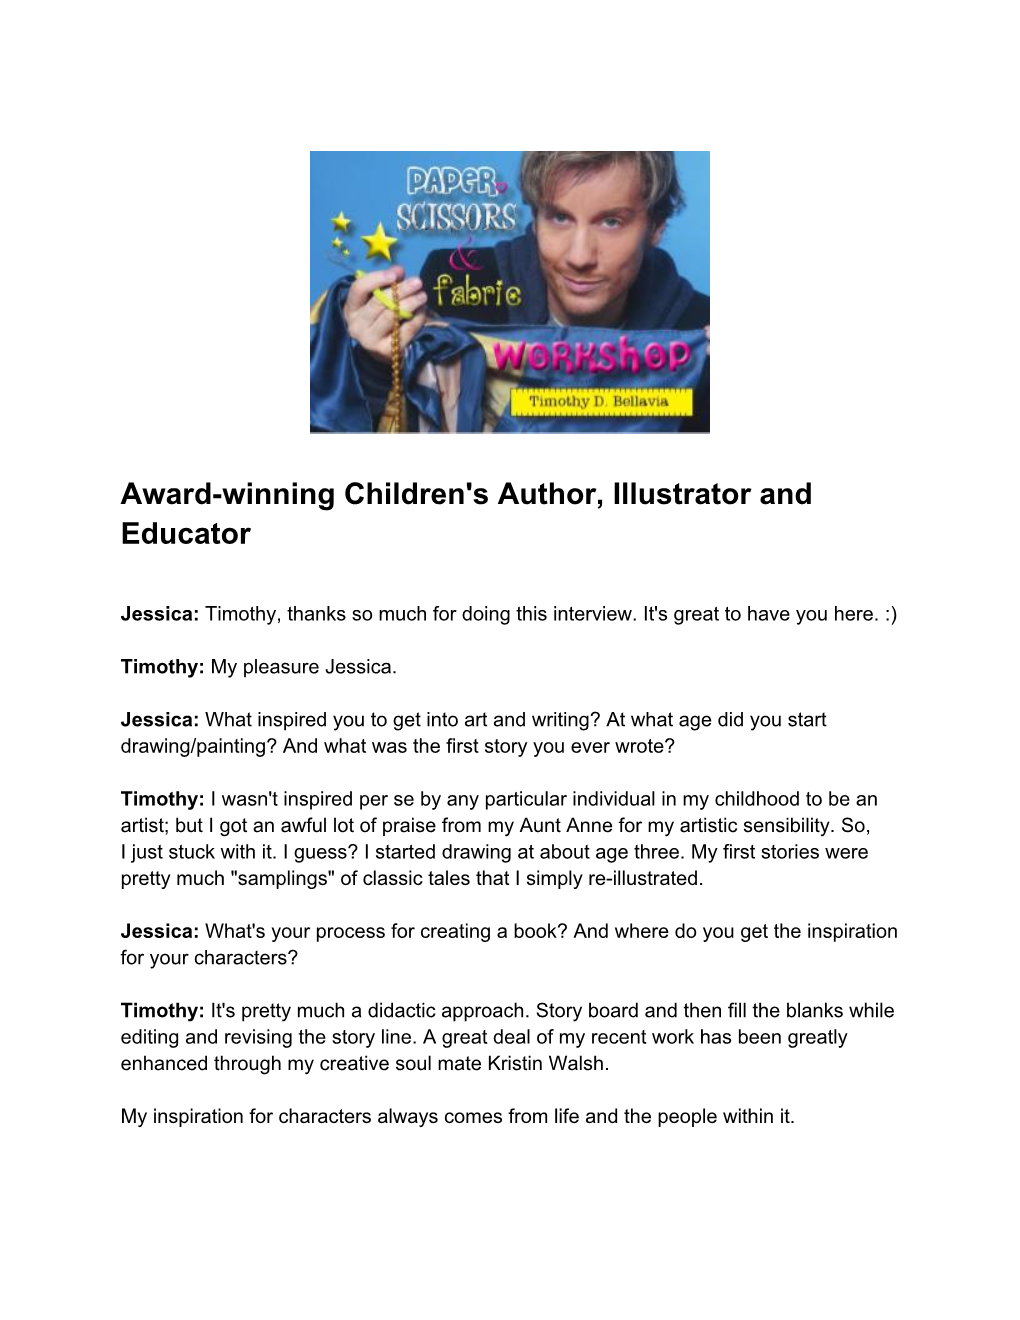 Award-Winning Children's Author, Illustrator and Educator